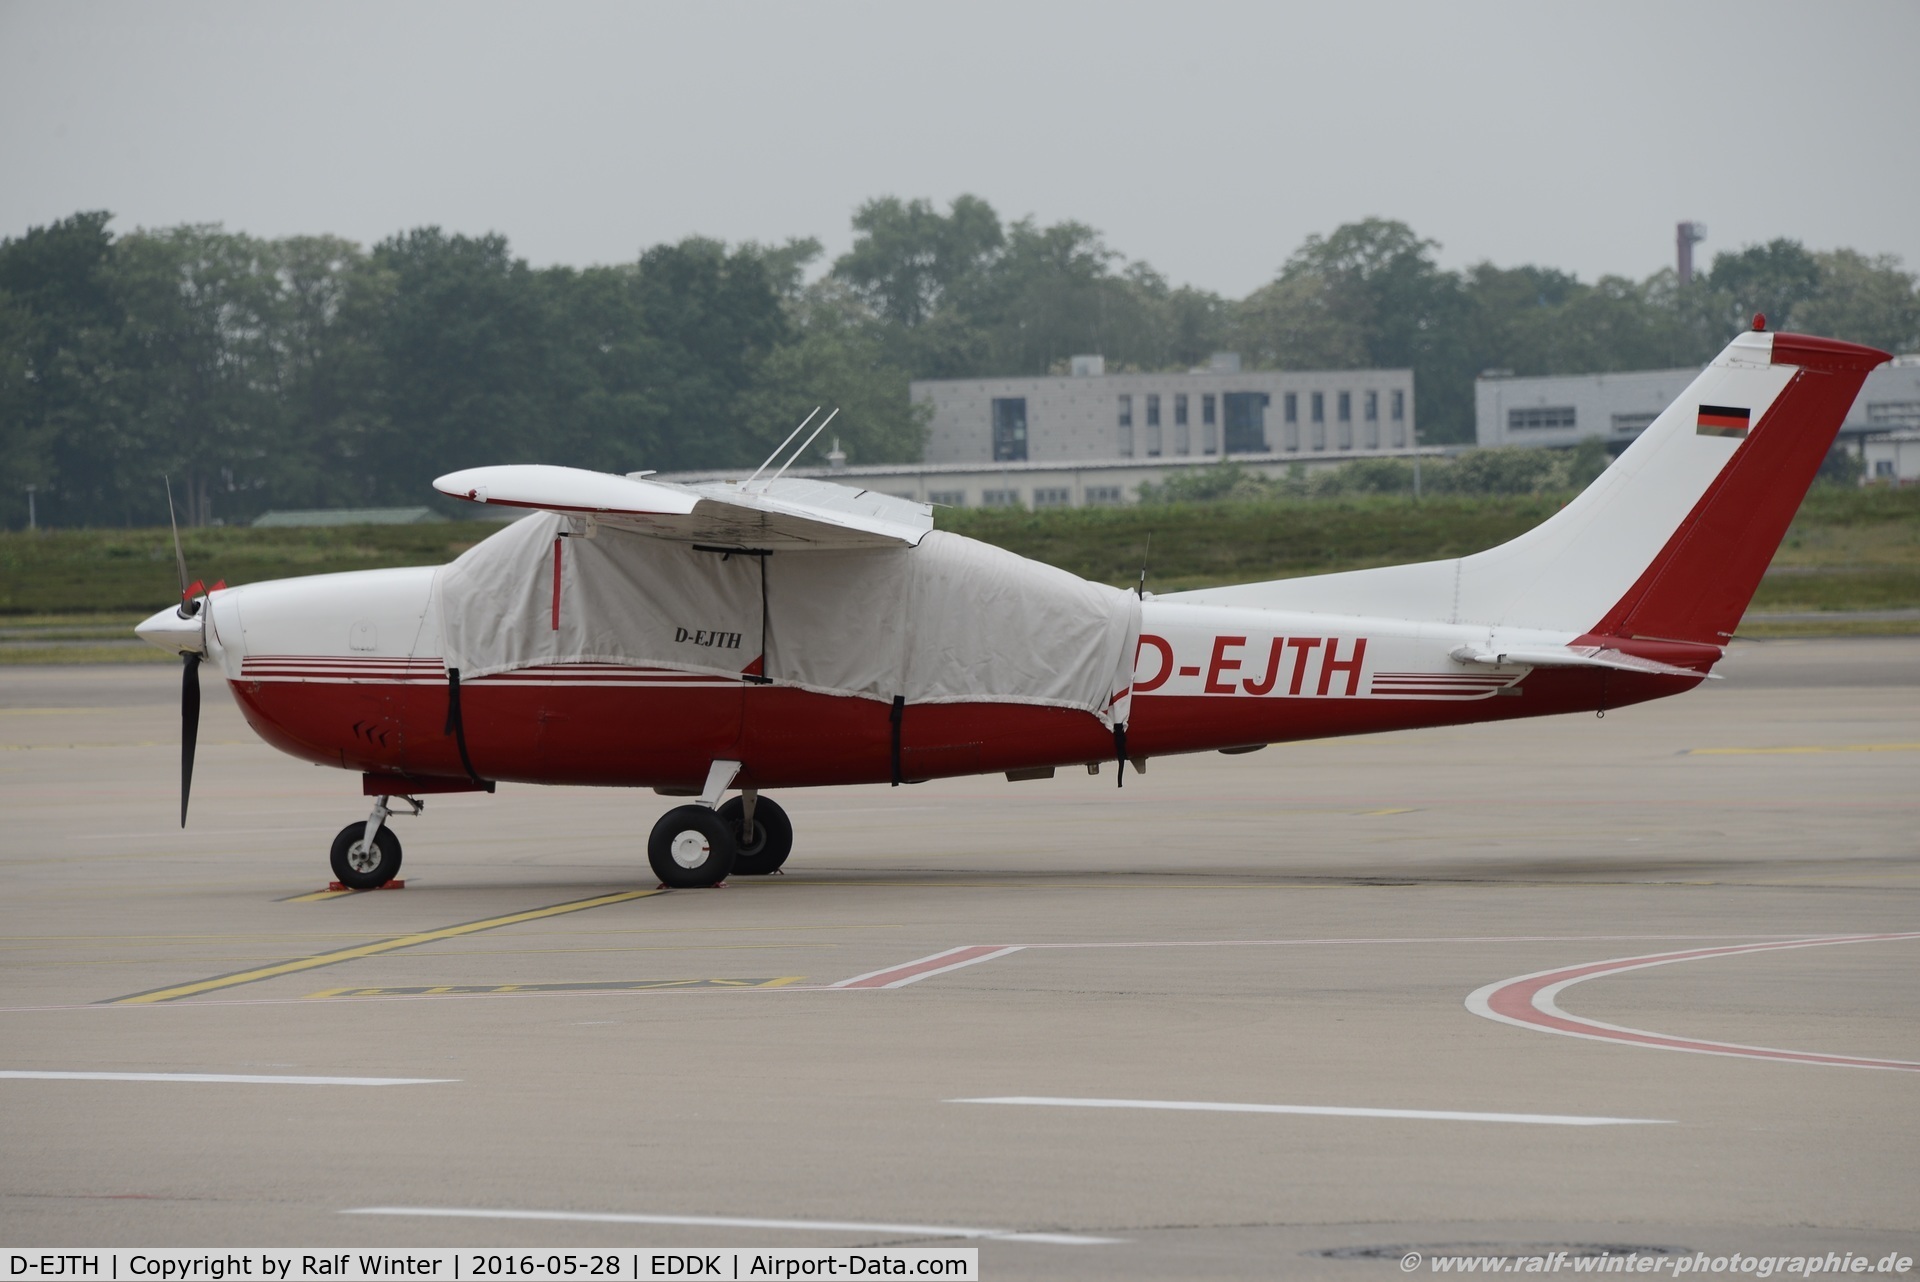 D-EJTH, 1969 Cessna T210 Centurion C/N 210-0408, Cessna T210J Turbo Centurion - Private - T210-00408 - D-EJTH - 28.05.2016 - CGN